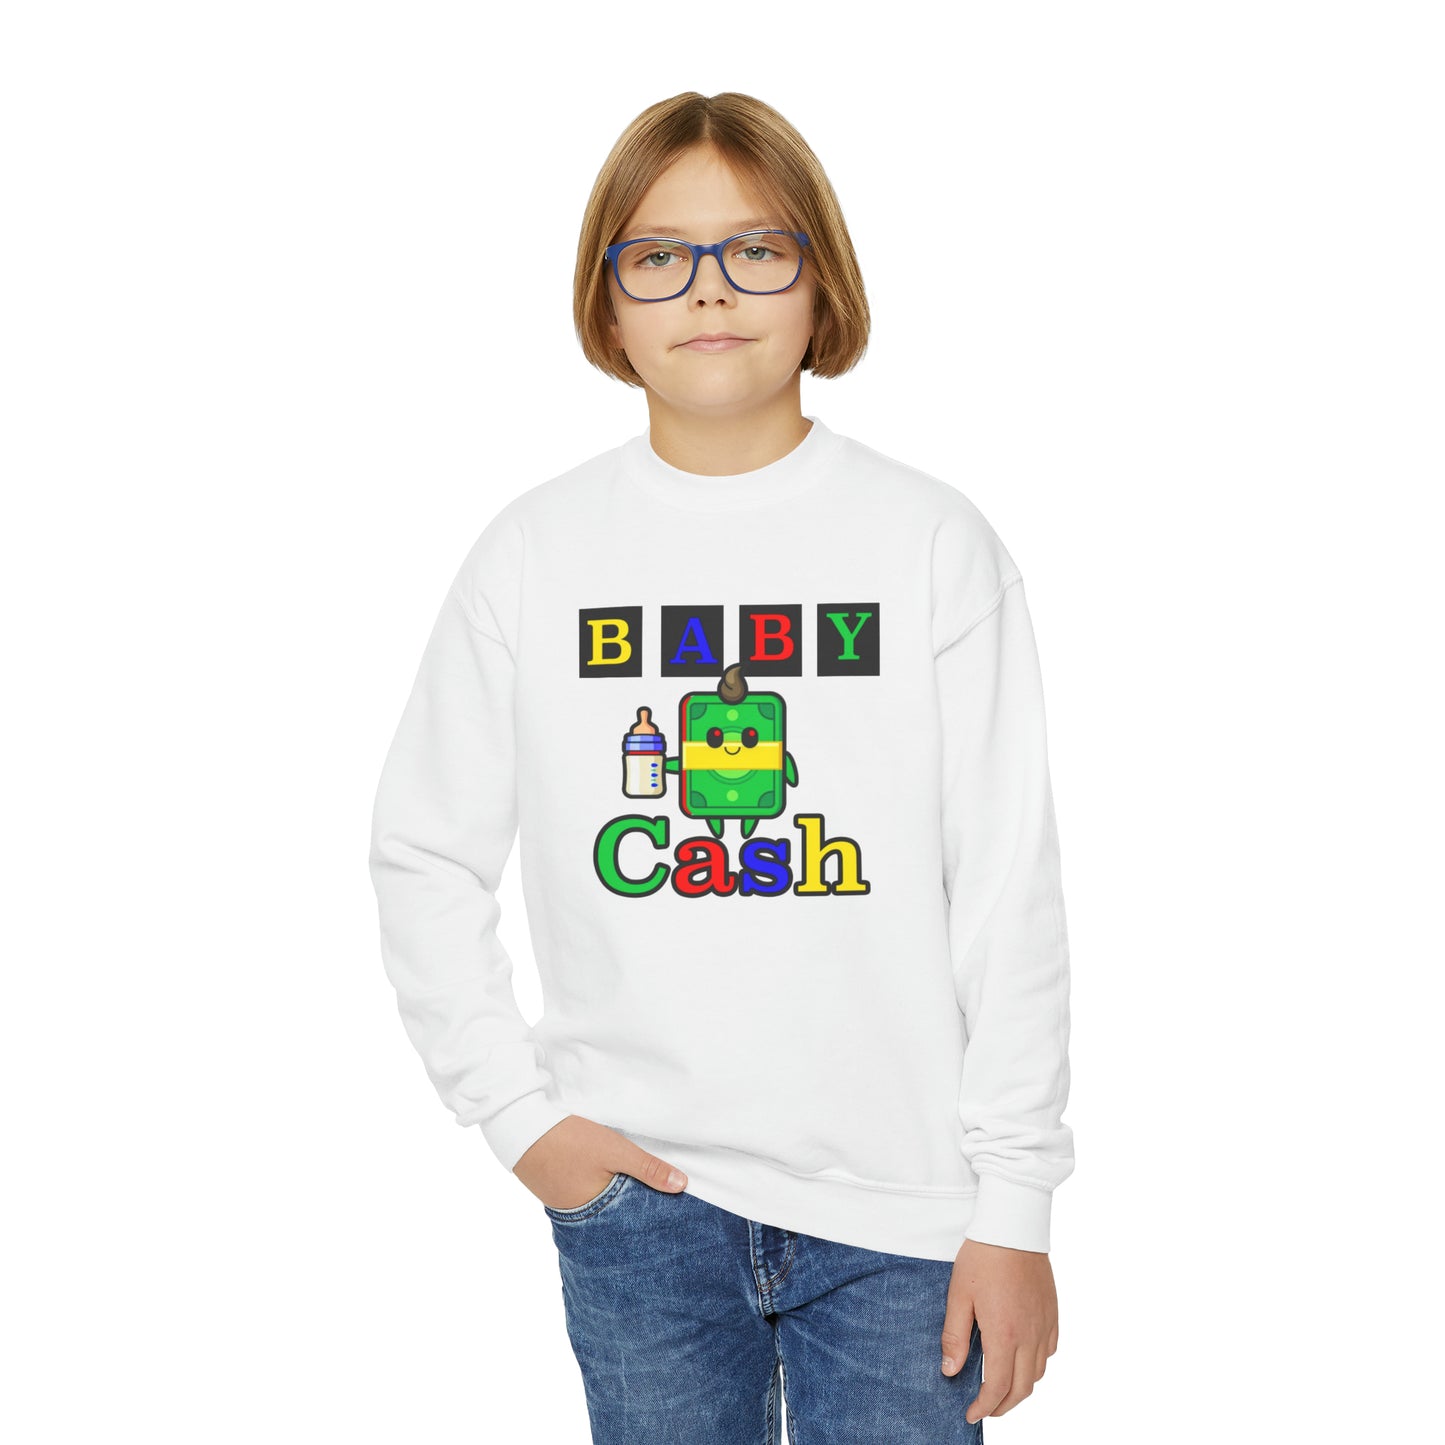 Baby Cash Sweatshirt